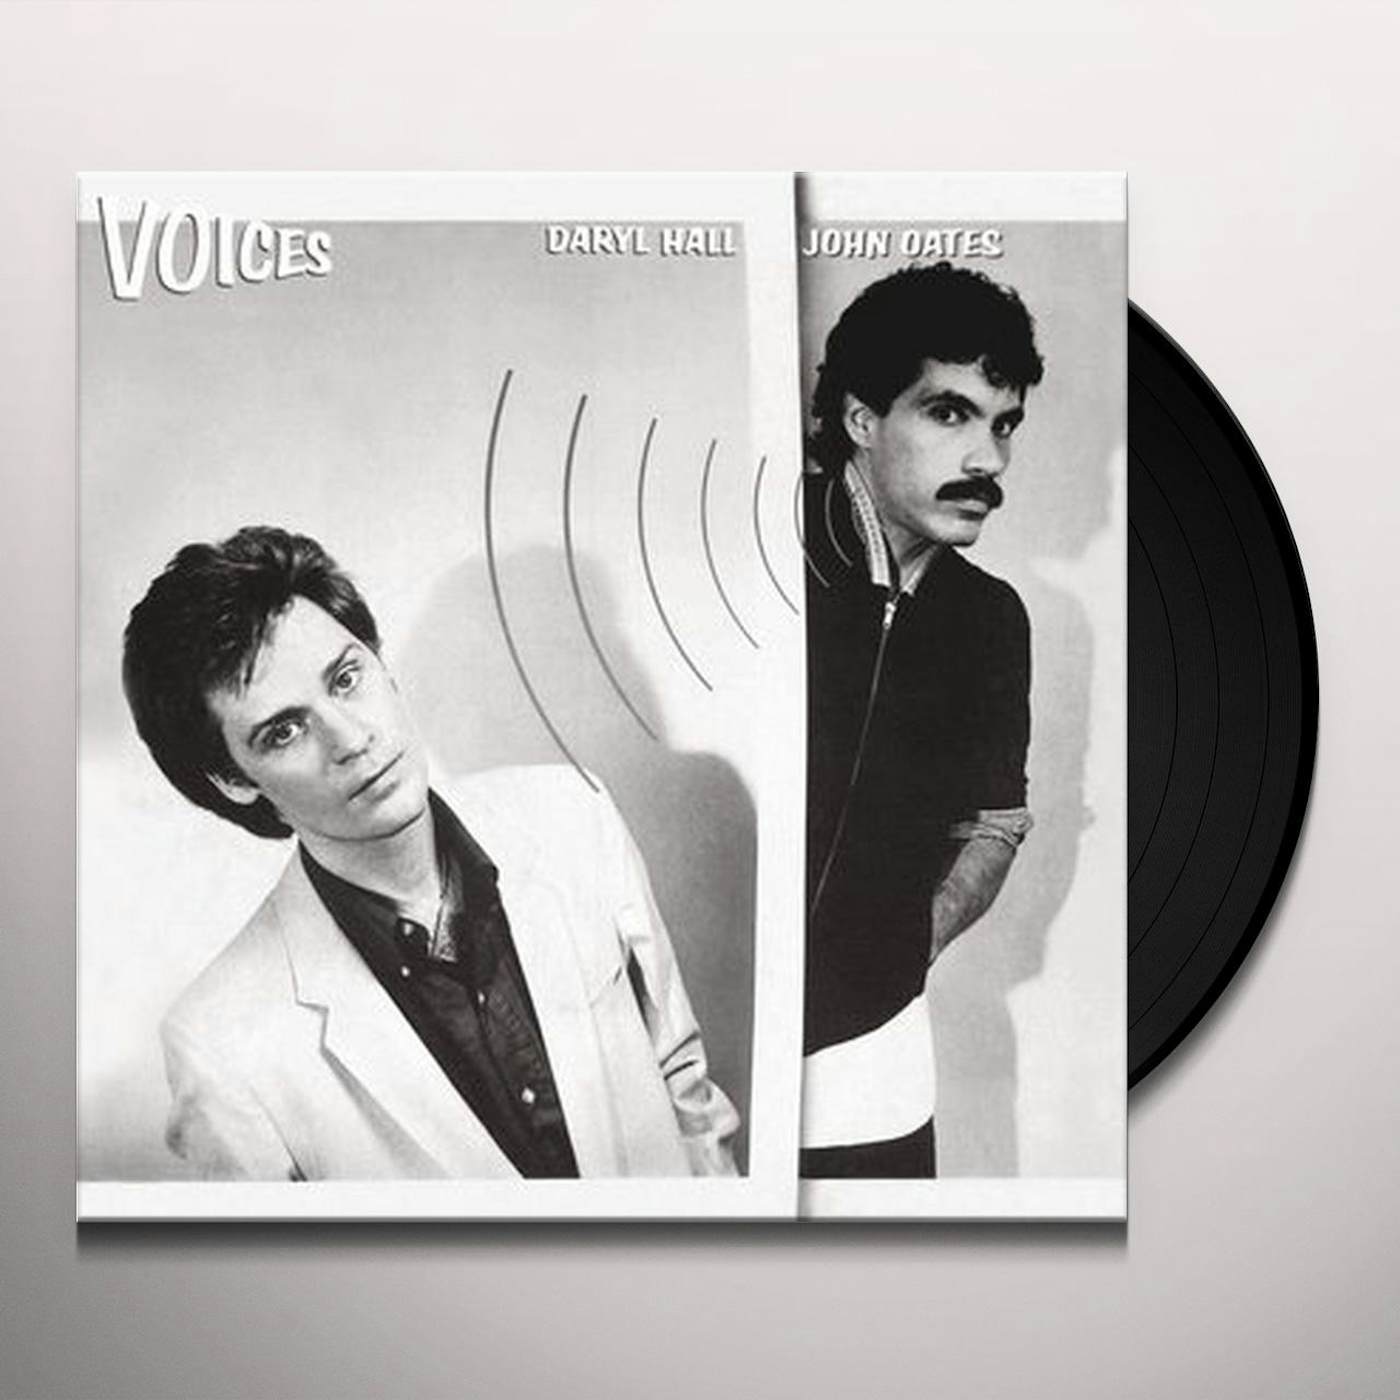 Daryl Hall & John Oates Voices Vinyl Record